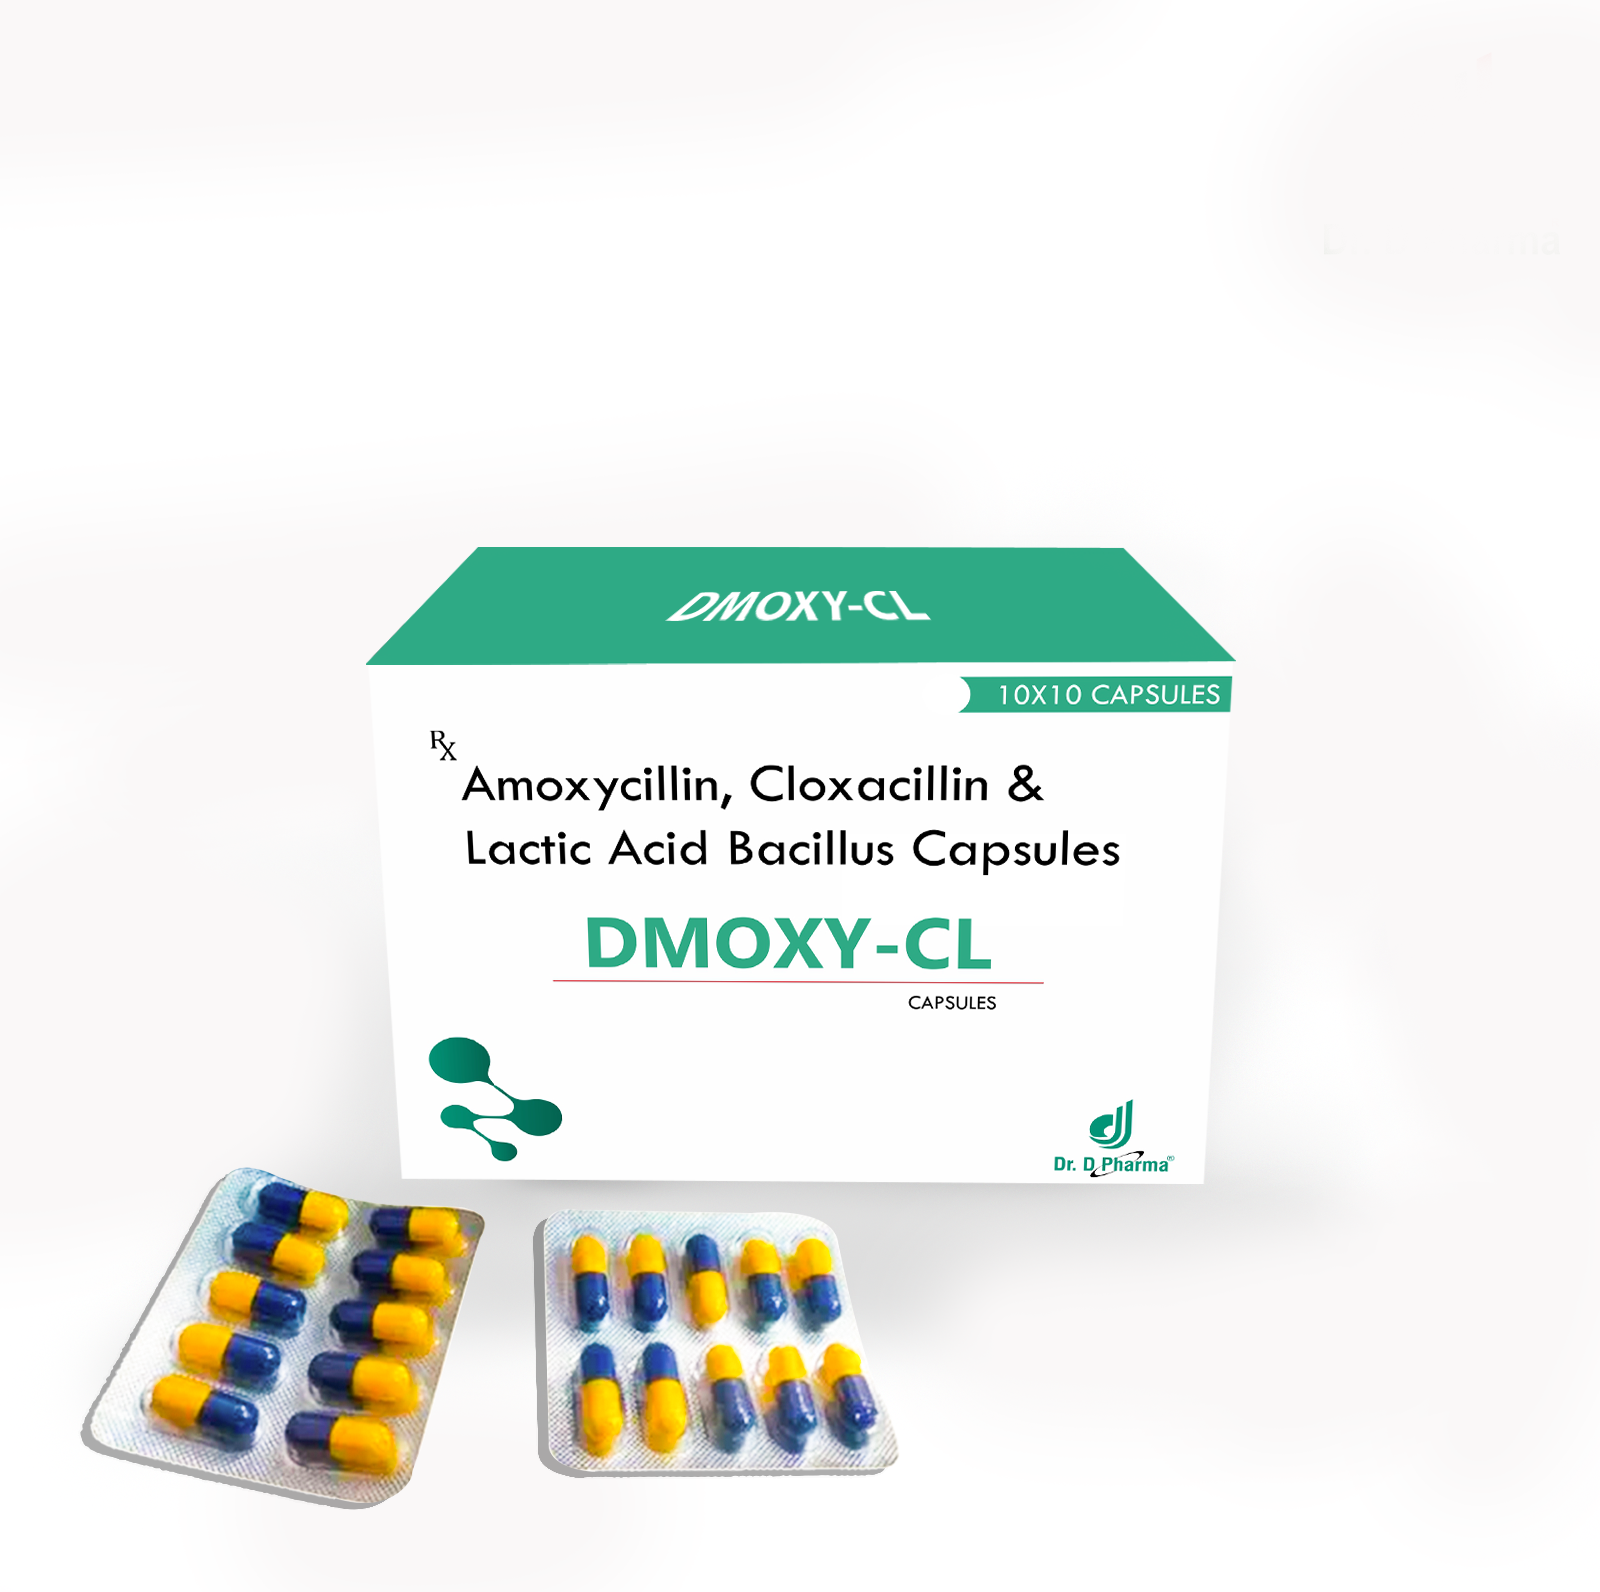 DMOXY-CL